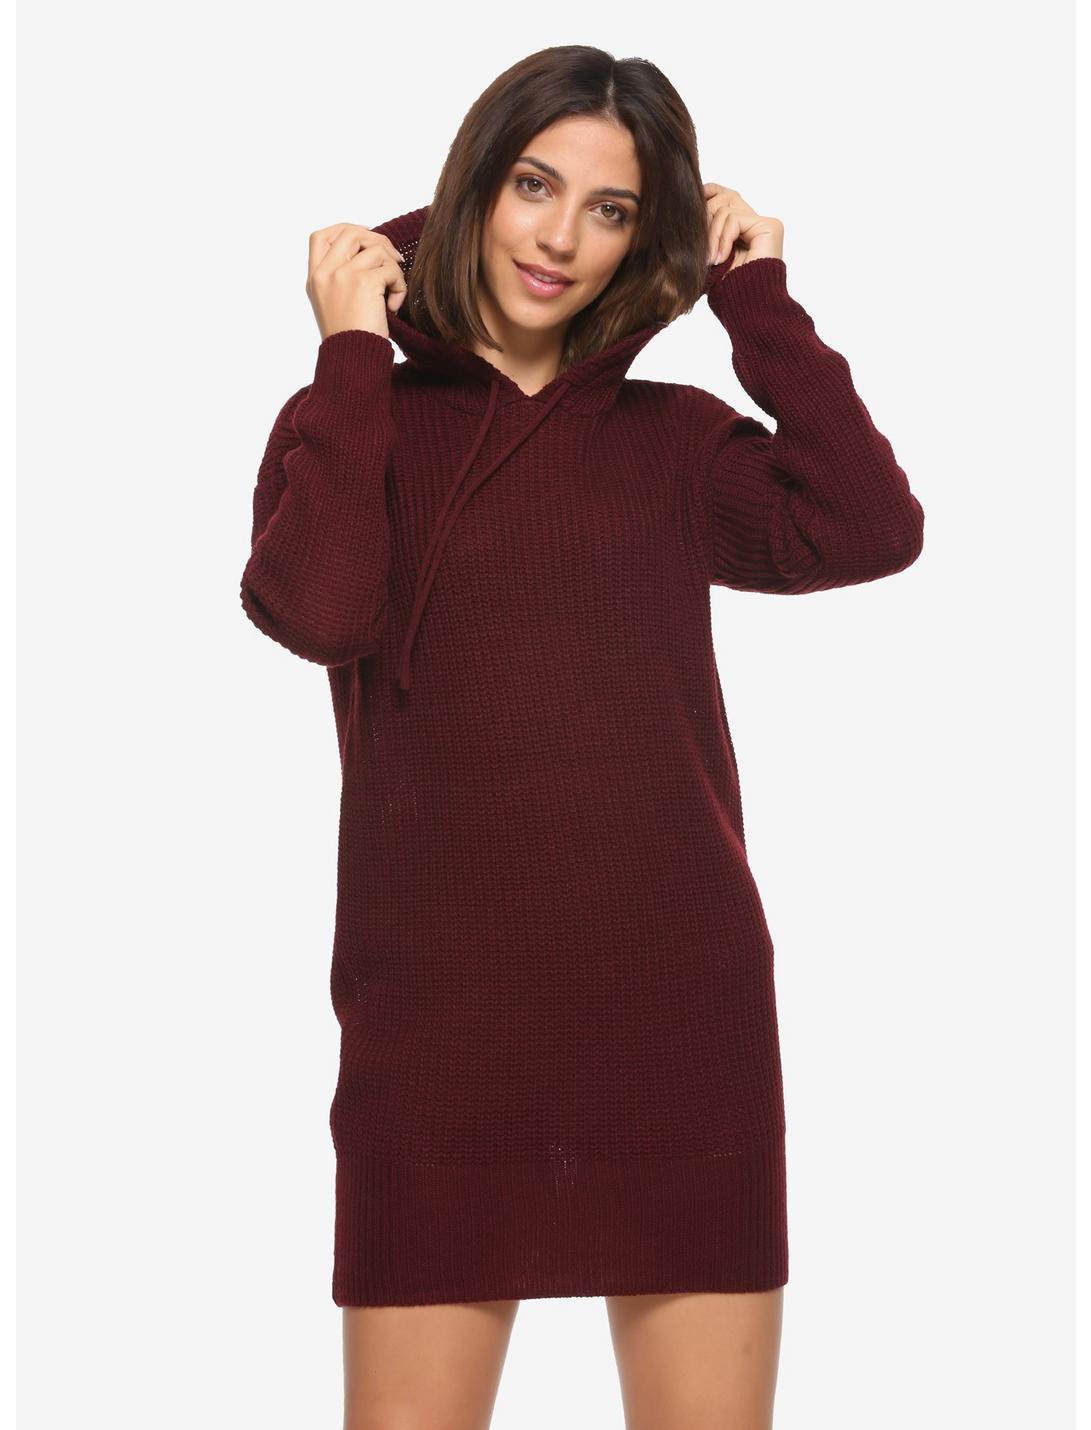 Merlot Hooded Sweater Dress, MERLOT, hi-res